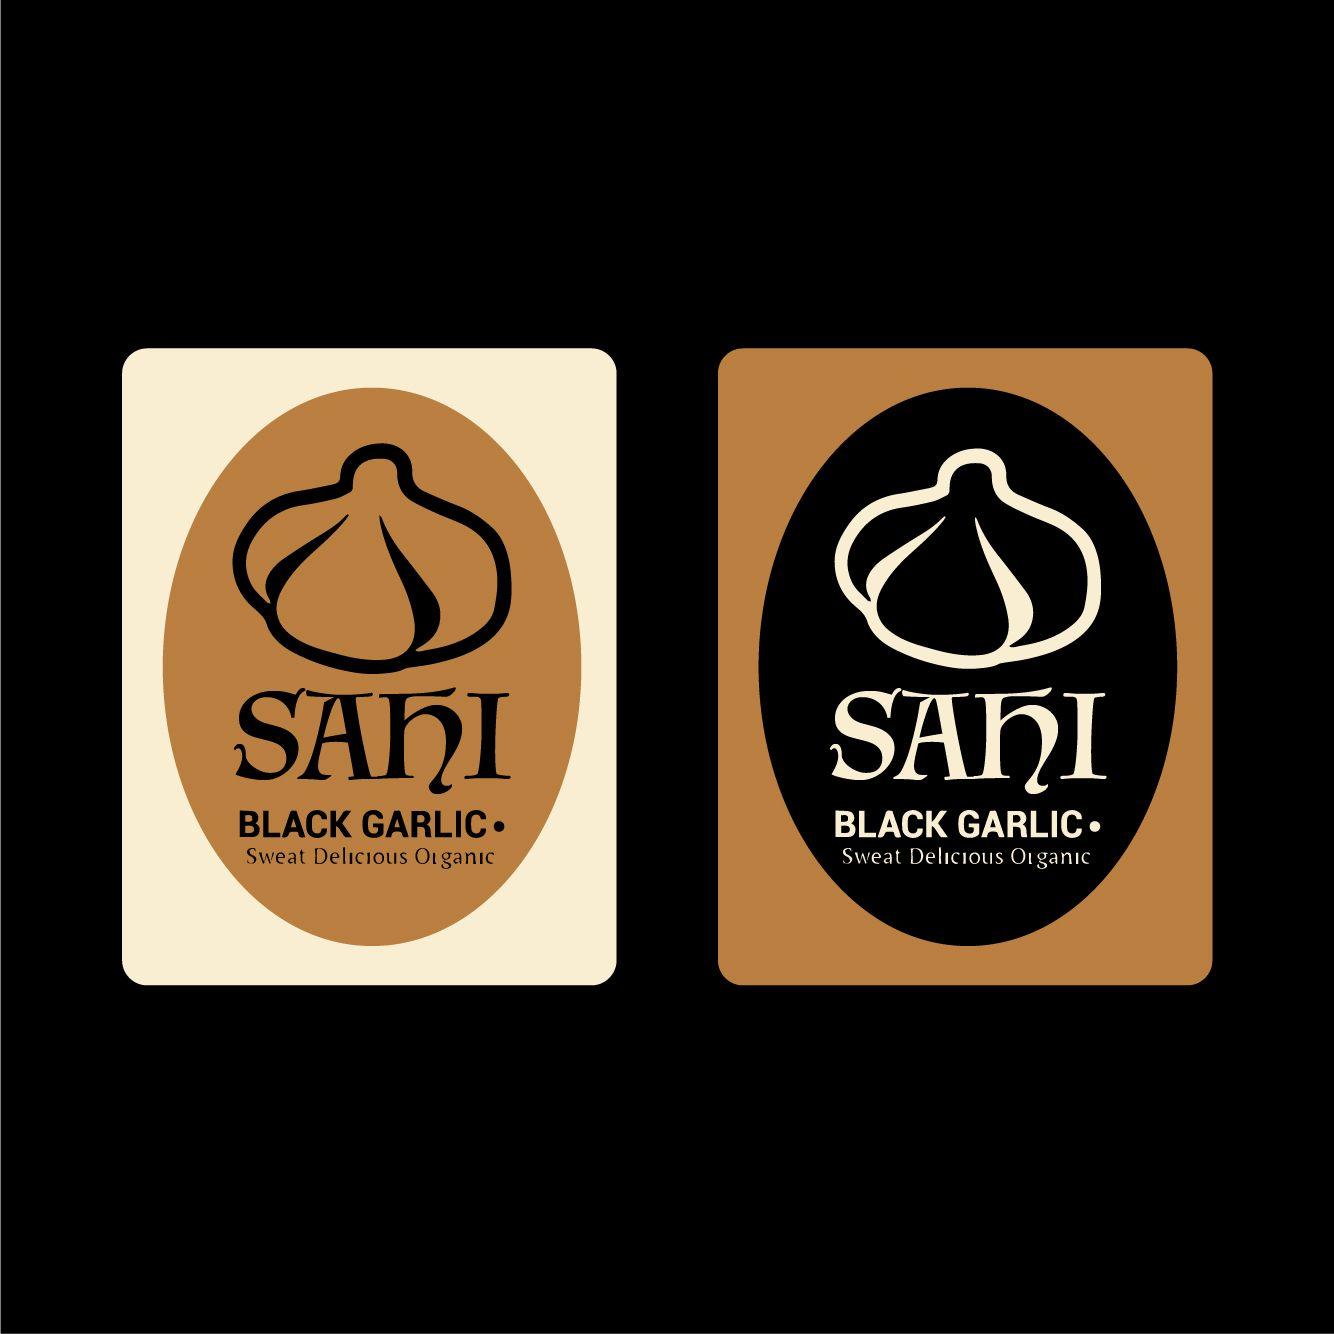 Sahi Logo - Design Brief. Desain Logo untuk Sahi Blackgarlic